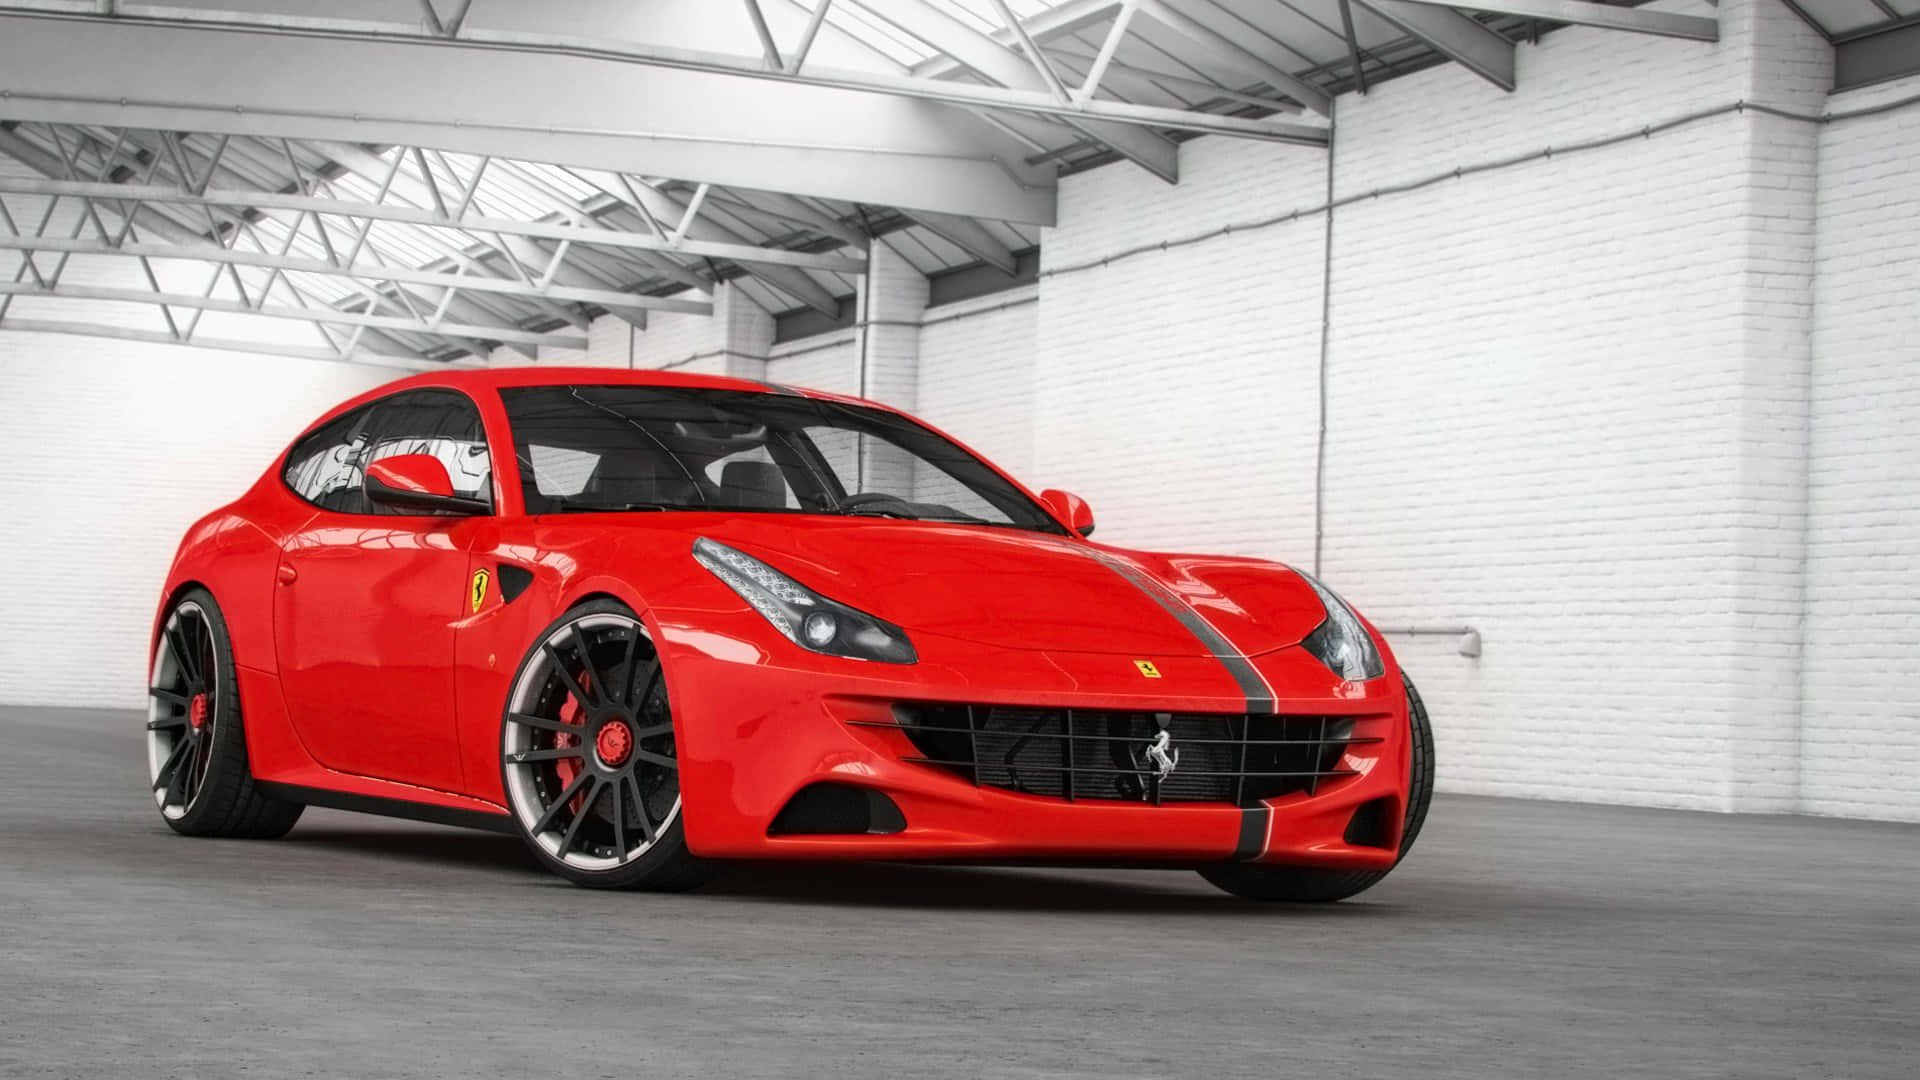 A Stunning Red Ferrari FF in High Definition Wallpaper